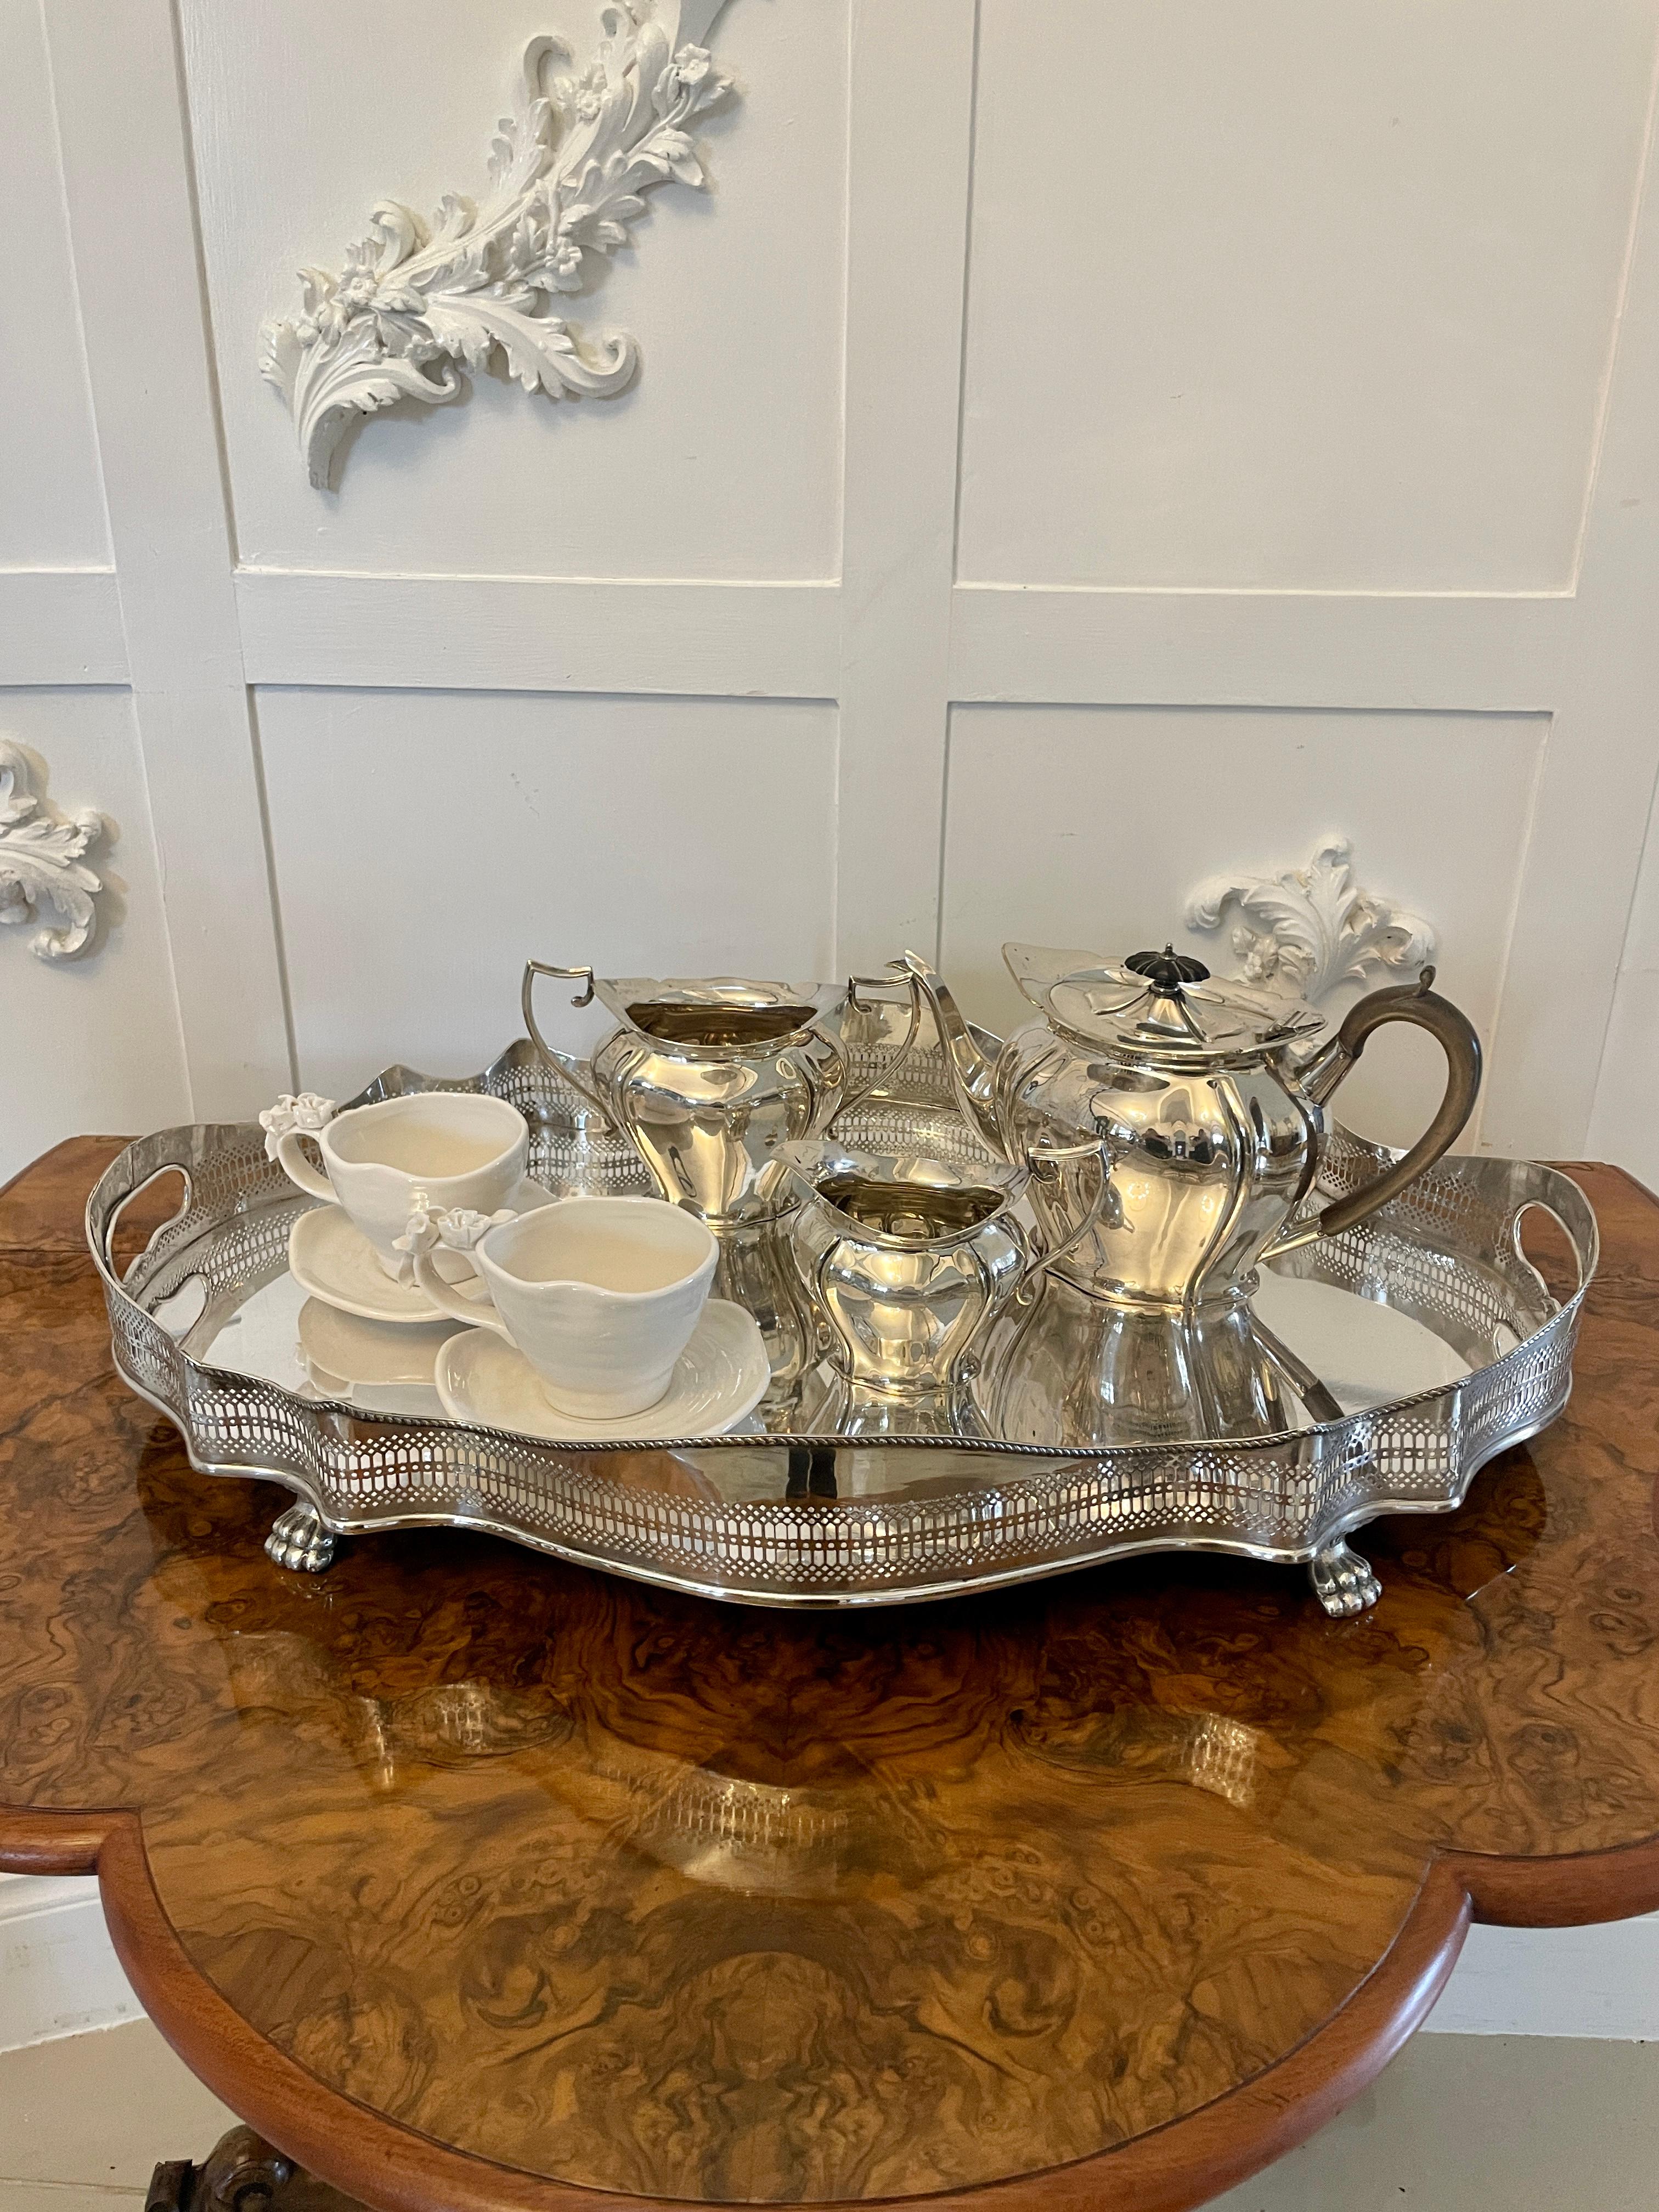 Antique Edwardian quality silver plated tea set consisting of a teapot, sugar bowl and milk jug 


A lovely pretty set in wonderful original condition


Dimensions:
Teapot 16 x 27 x 13 cm
Milk Jug 10 x 13.5 x 7.5 cm
Sugar Bowl 10 x 18 x 9 cm


Dated